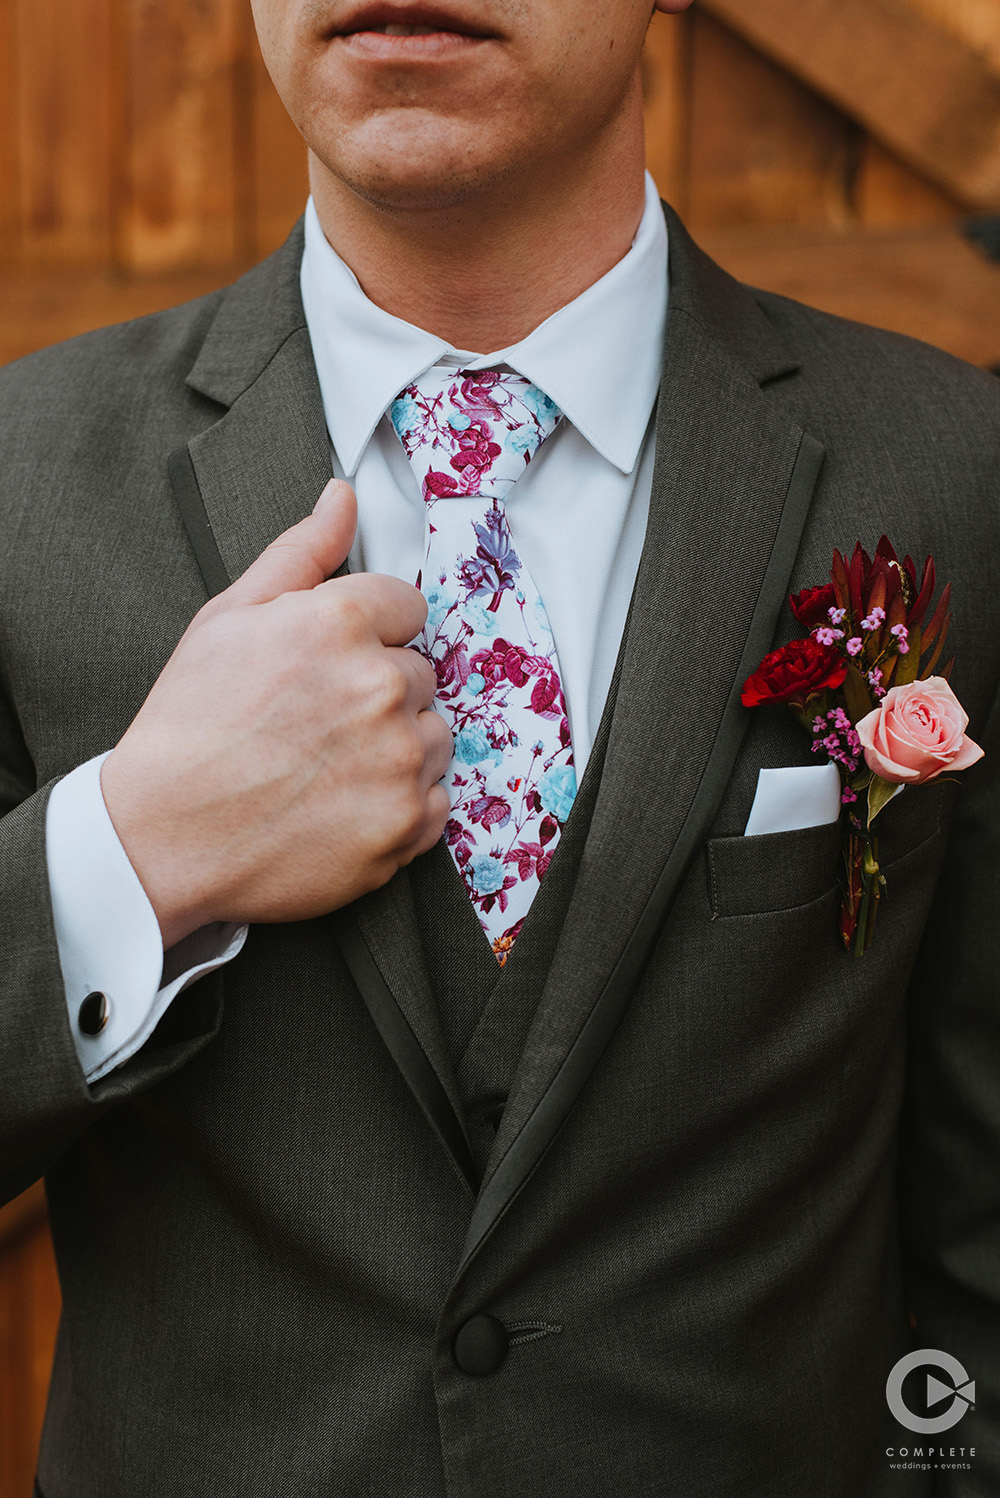 morrocan wedding colors in tie